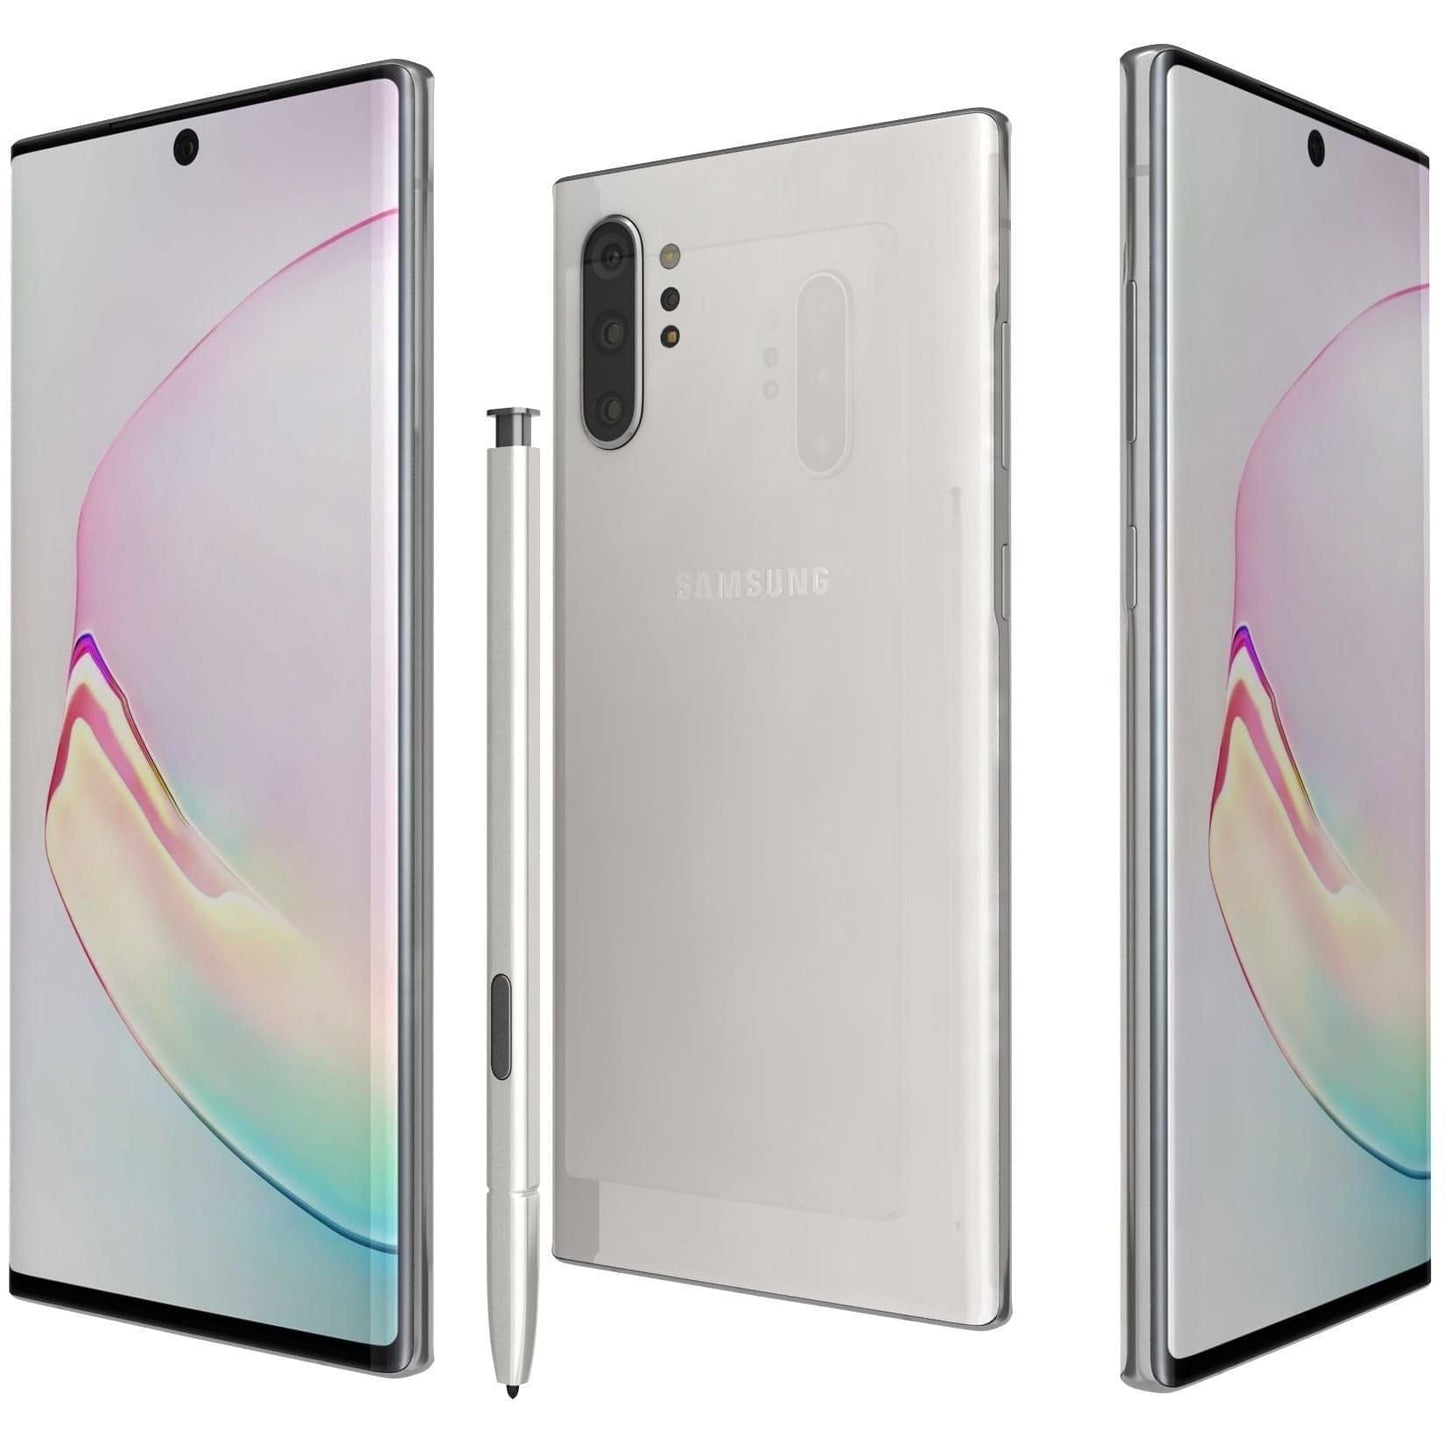 Samsung Galaxy Note10 - 256 GB - Aura White - AT&T - GSM